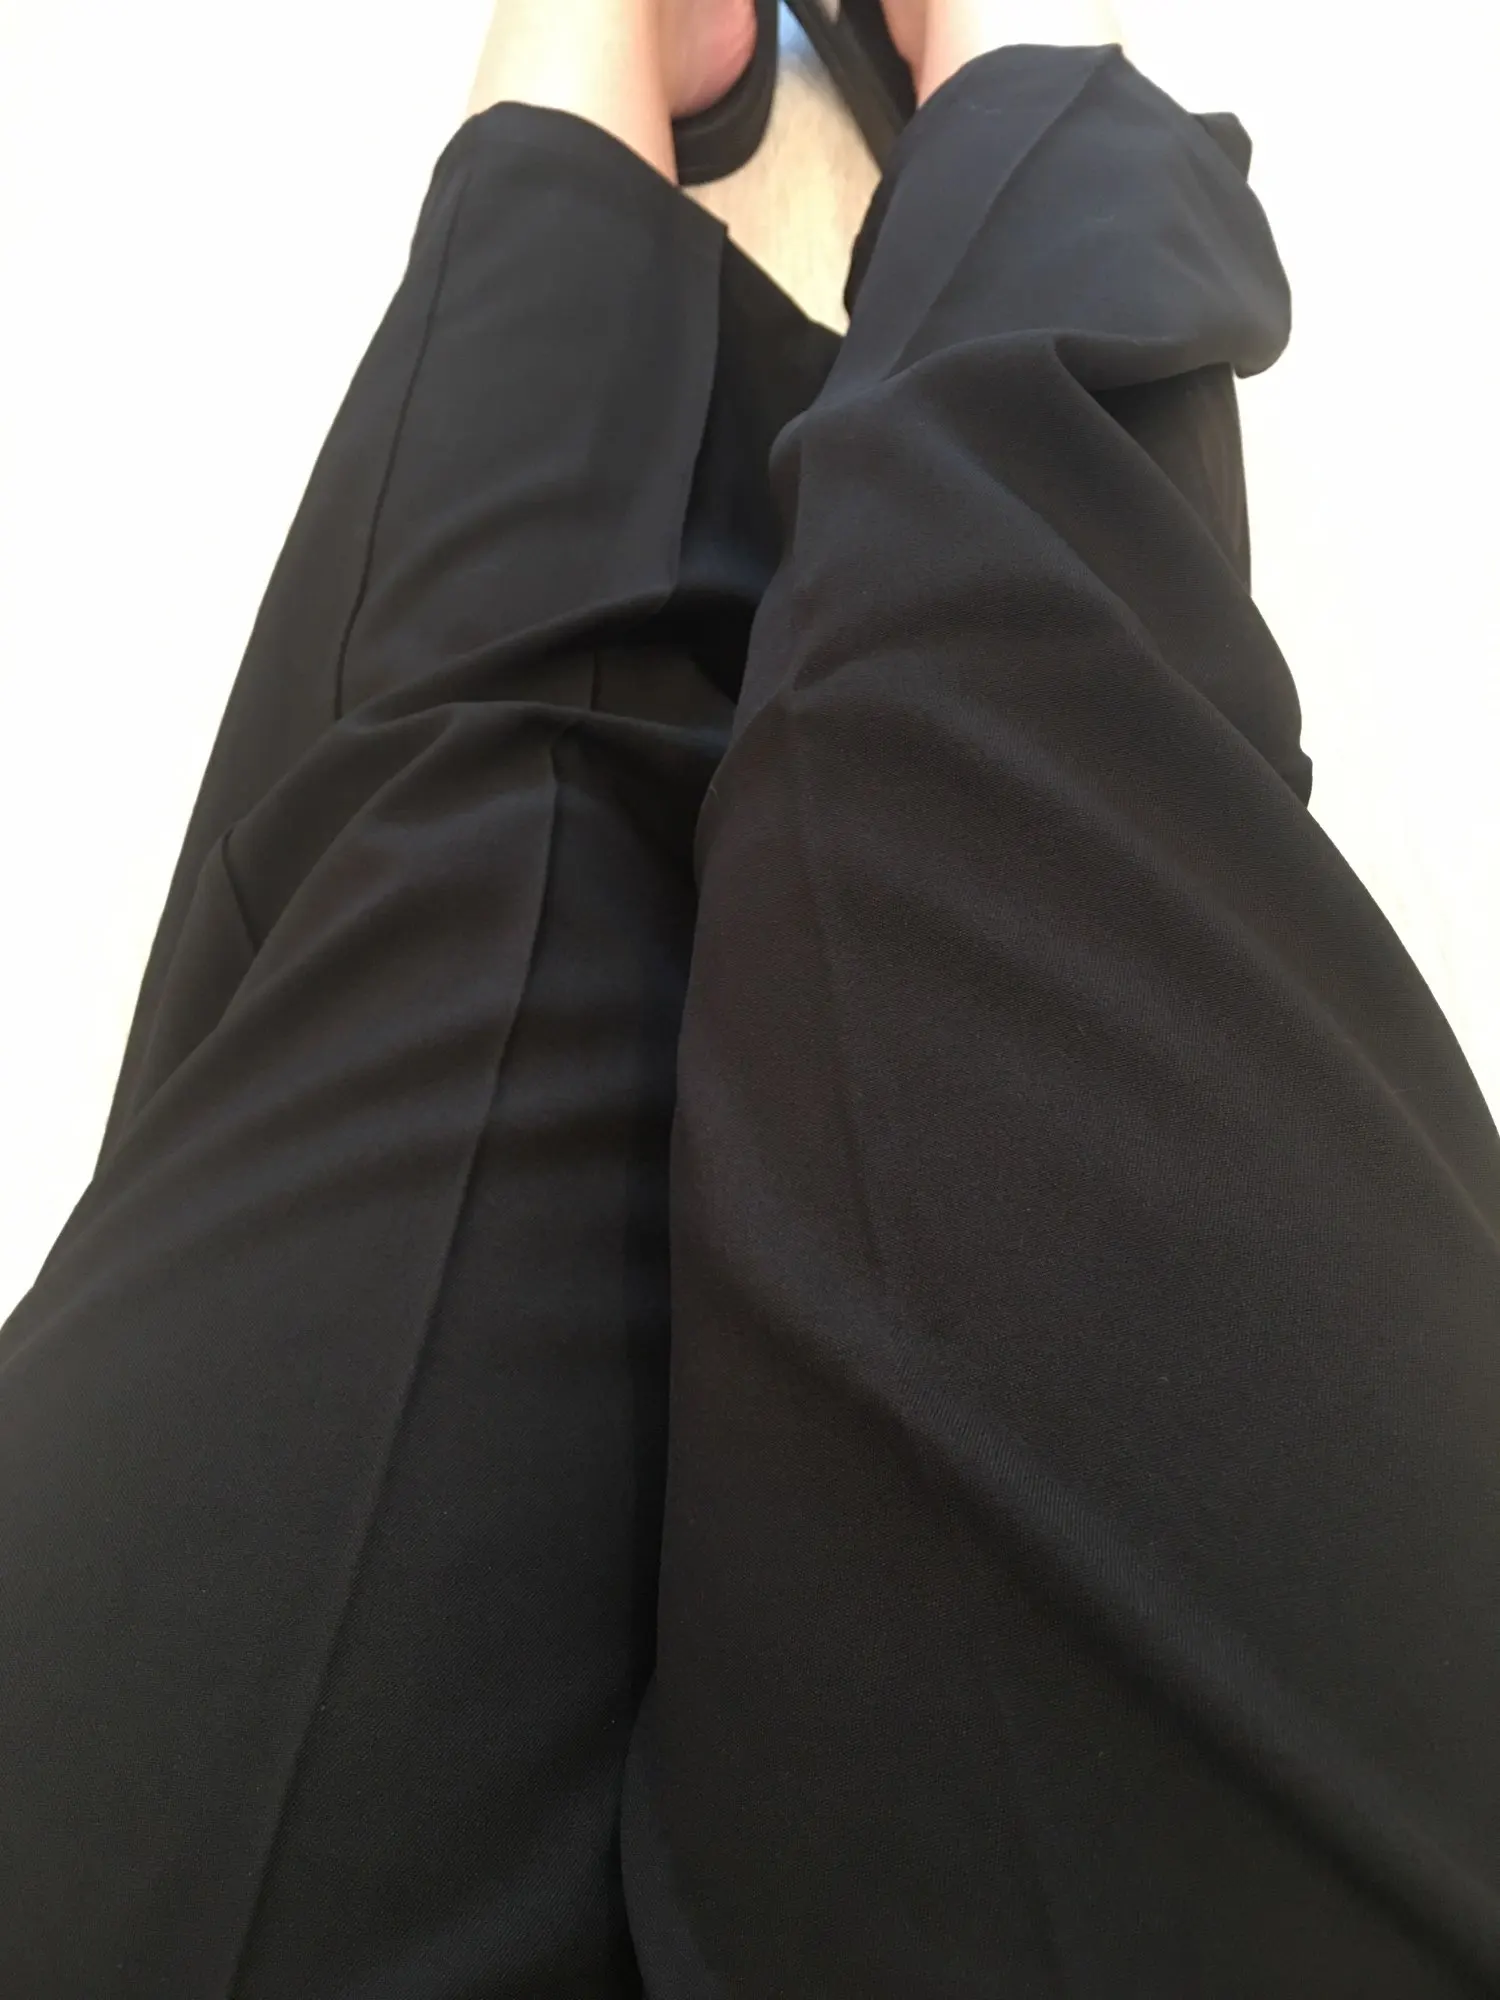 LAPPSTER Mens Black Korean Harem Pants 2021 Japanese Streetwear Joggers Harajuku Sweatpants Hip Hop Casual Trousers Plus Size photo review